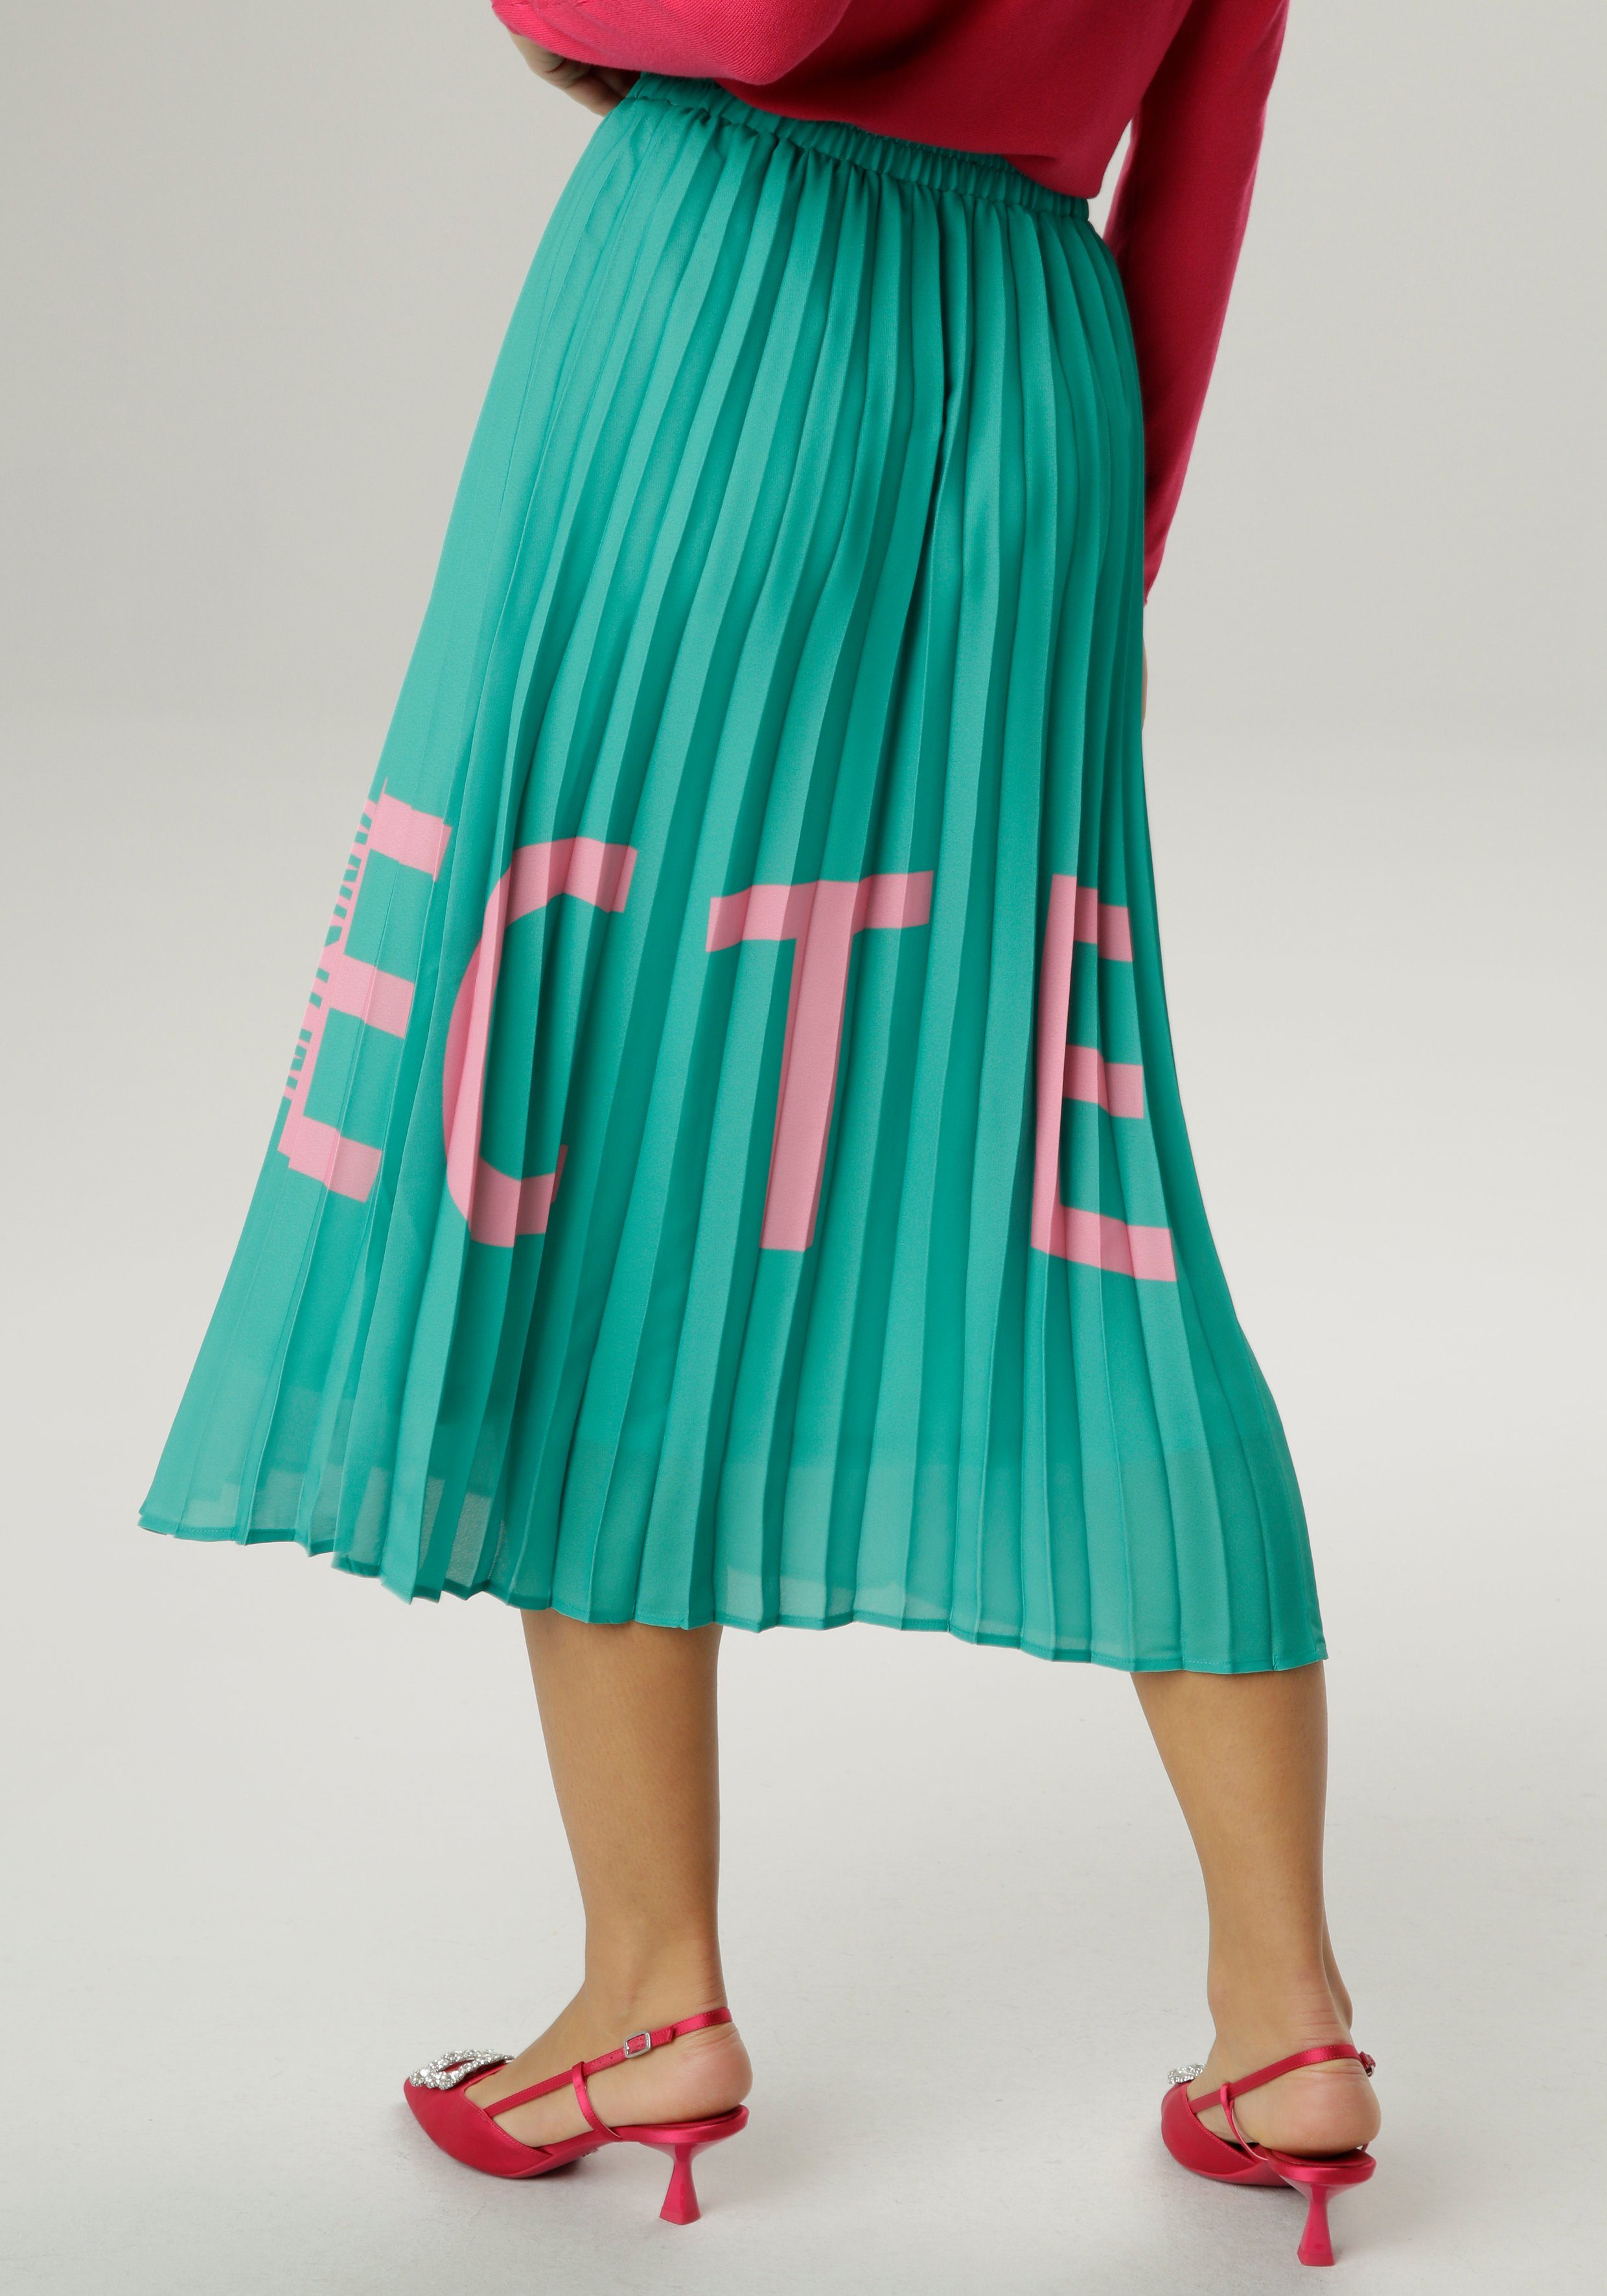 Aniston SELECTED Plisseerock mit in Knallfarbe grün-pink Markenschriftzug